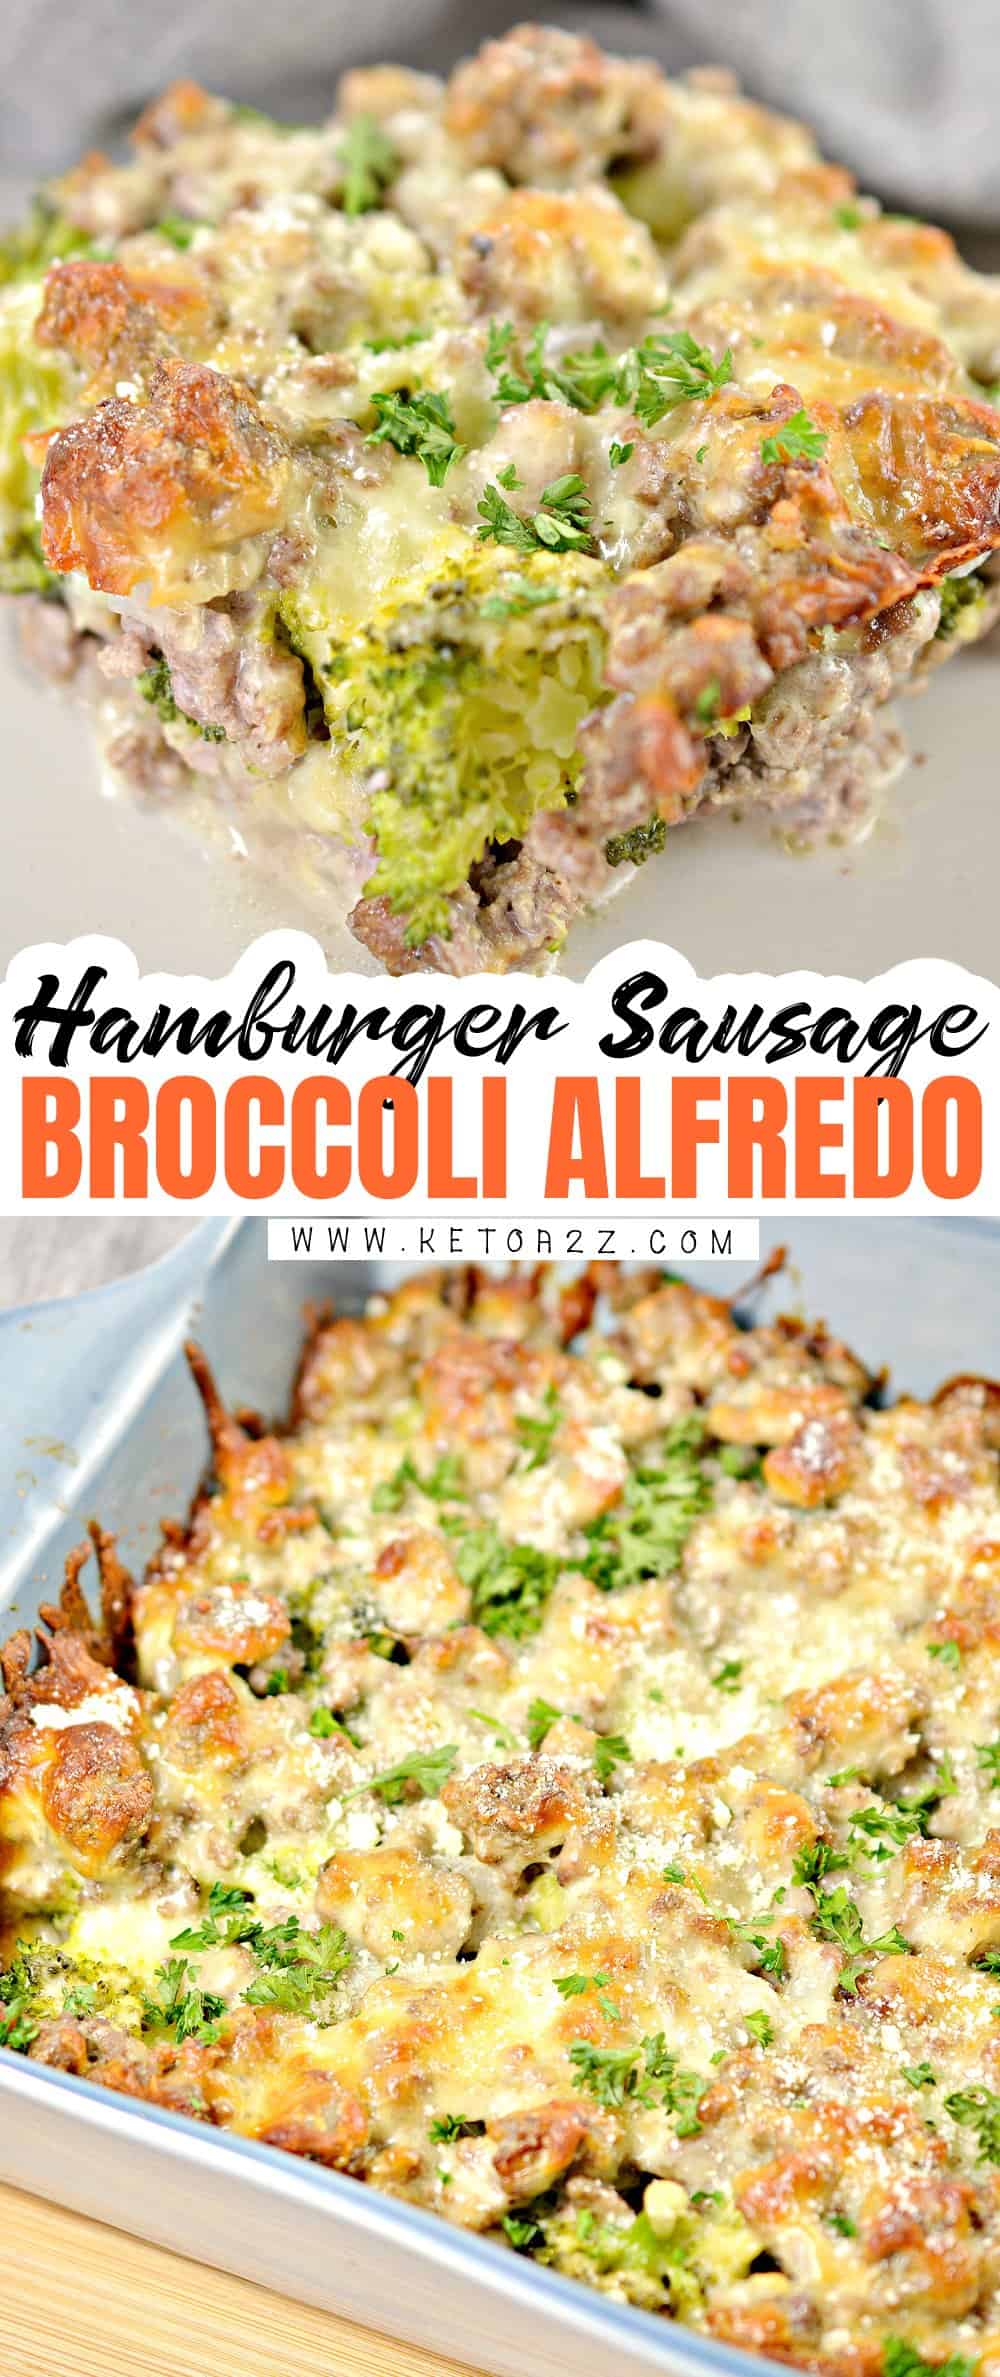 Hamburger Sausage and Broccoli Alfredo